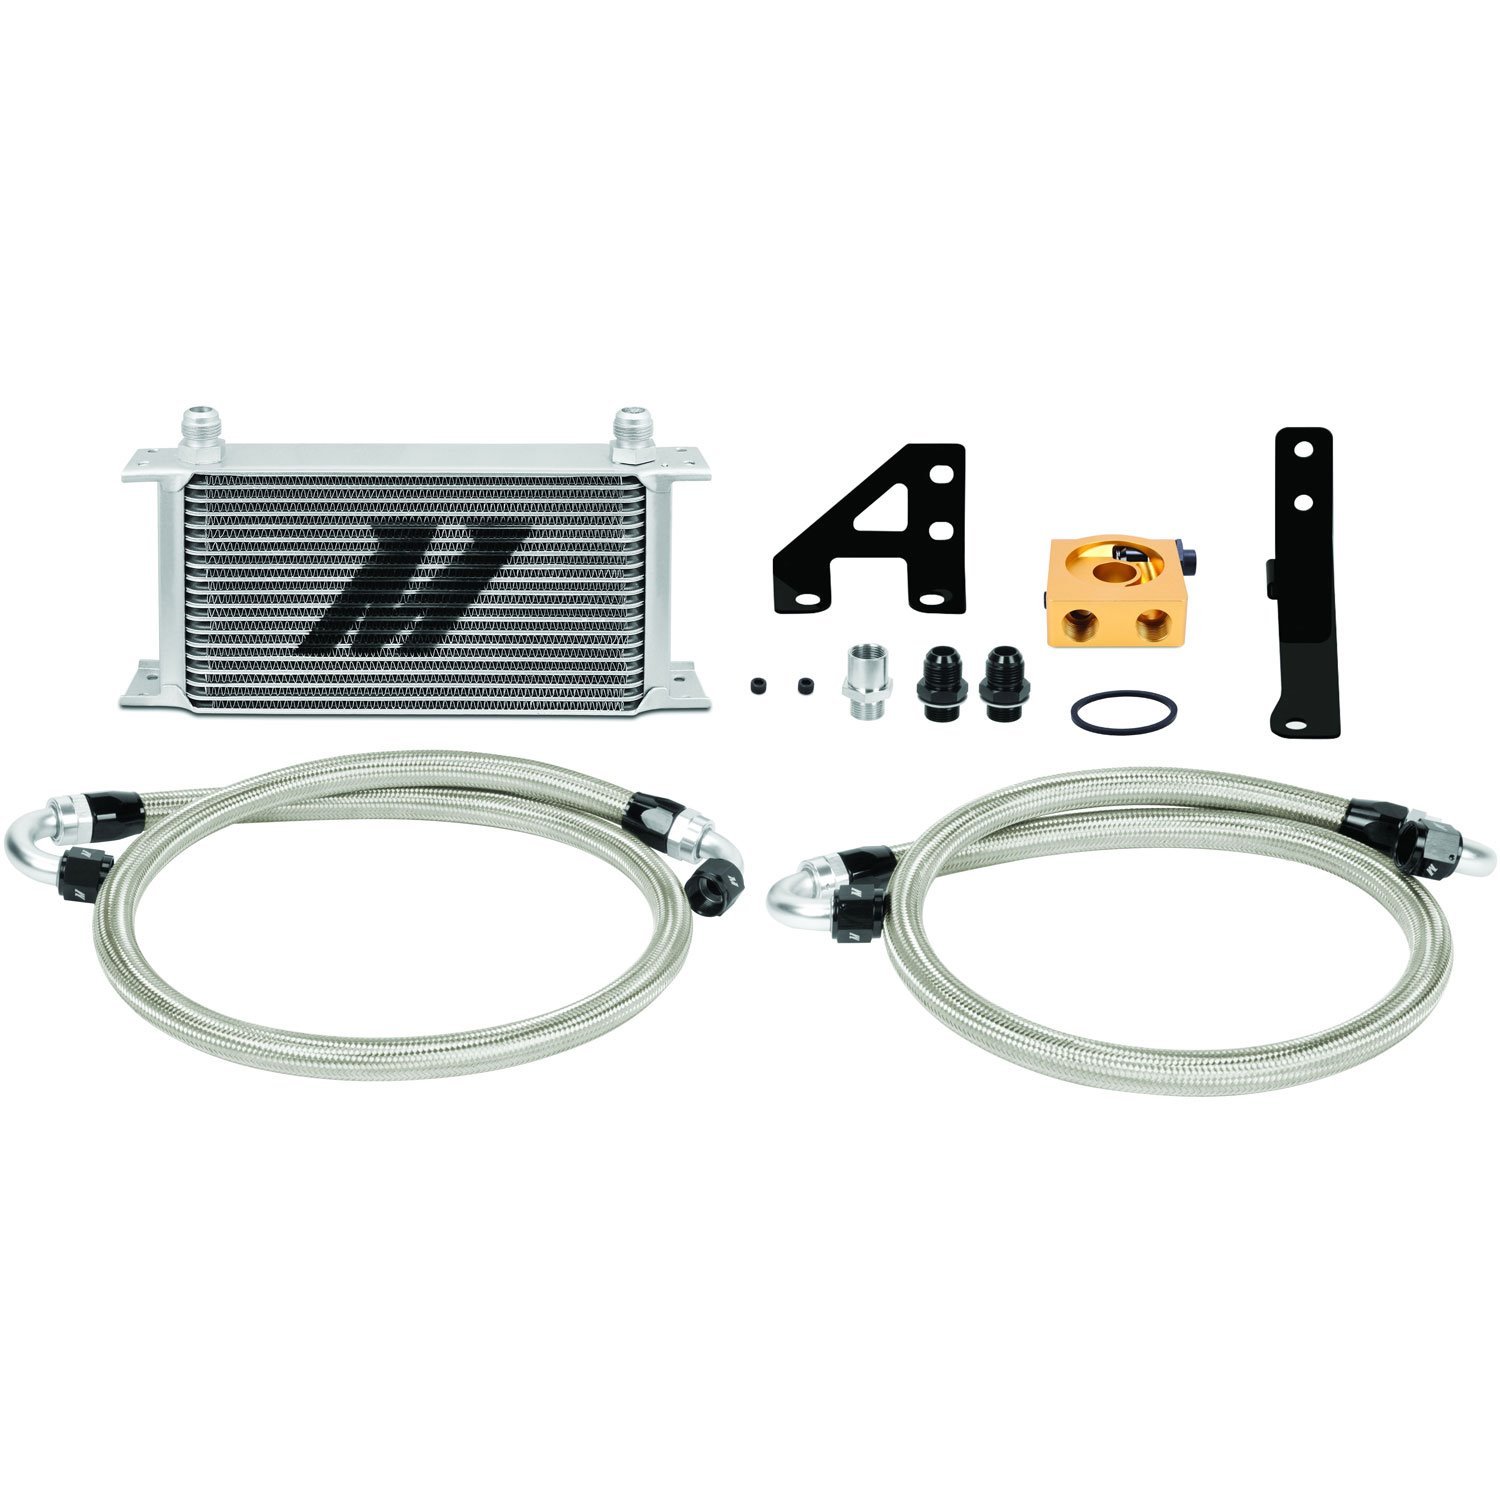 Subaru WRX STI Oil Cooler Kit - MFG Part No. MMOC-STI-15T